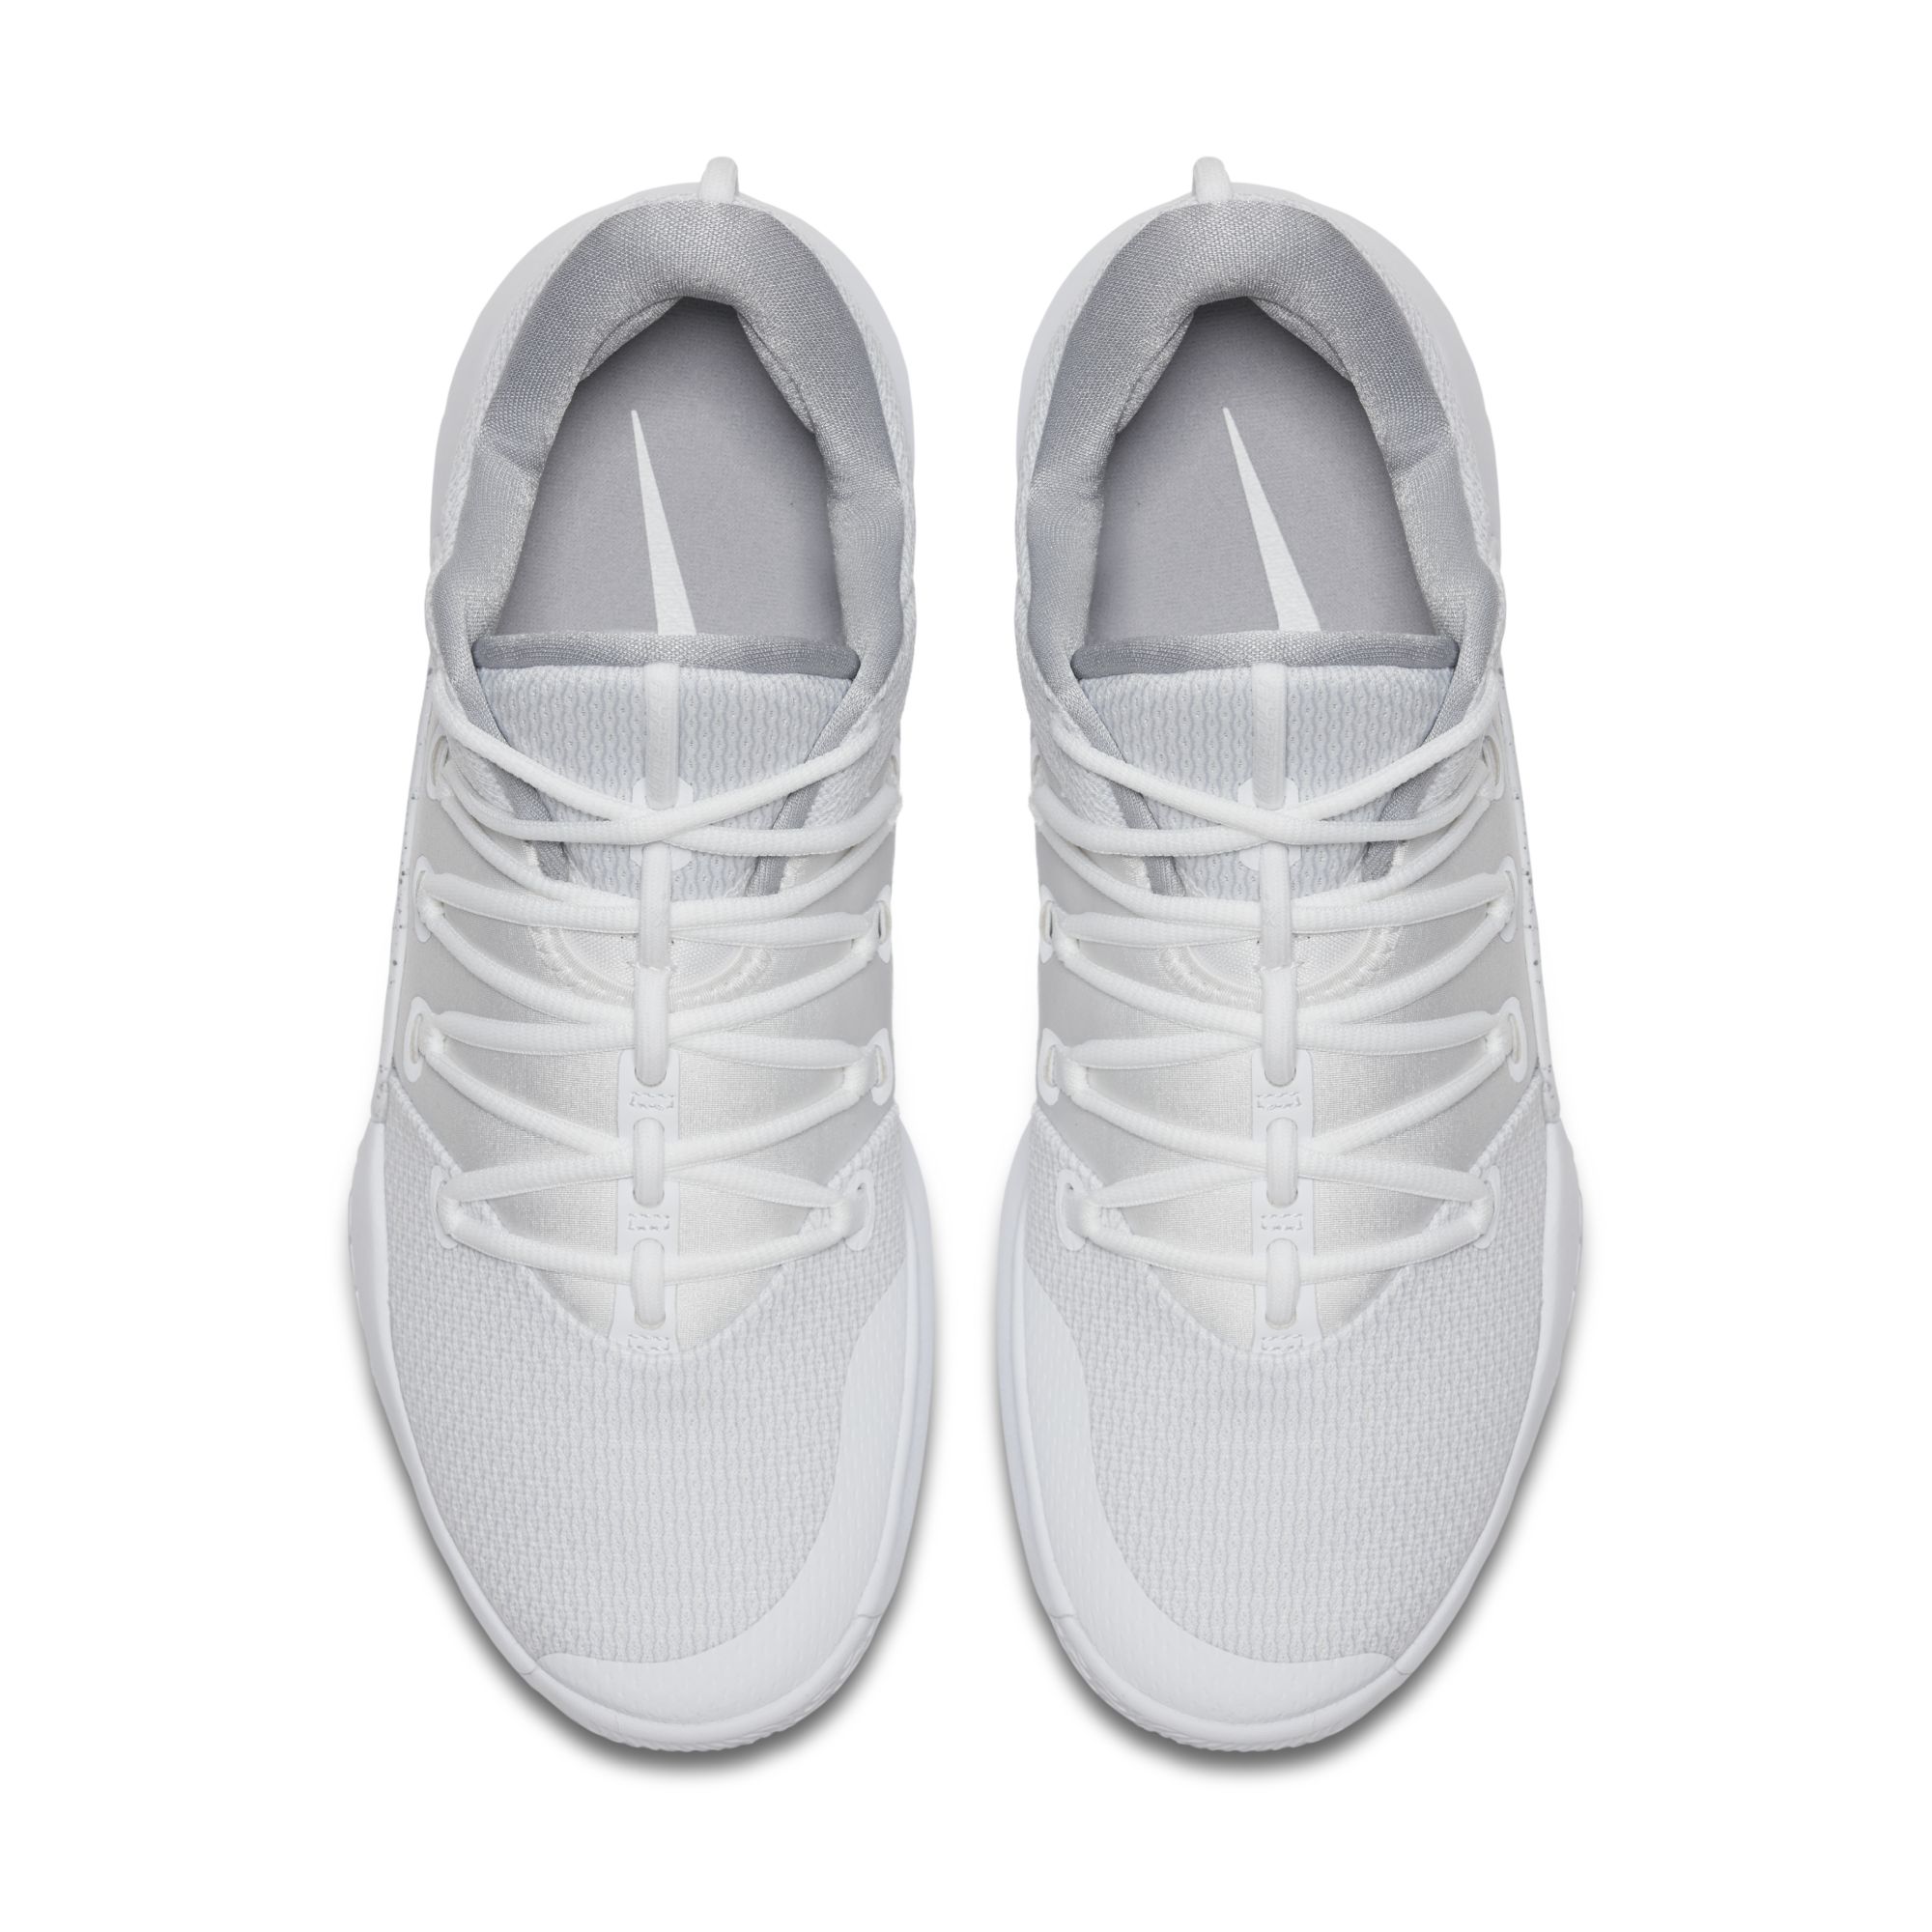 The Nike Hyperdunk X Low May Release Next Week - WearTesters